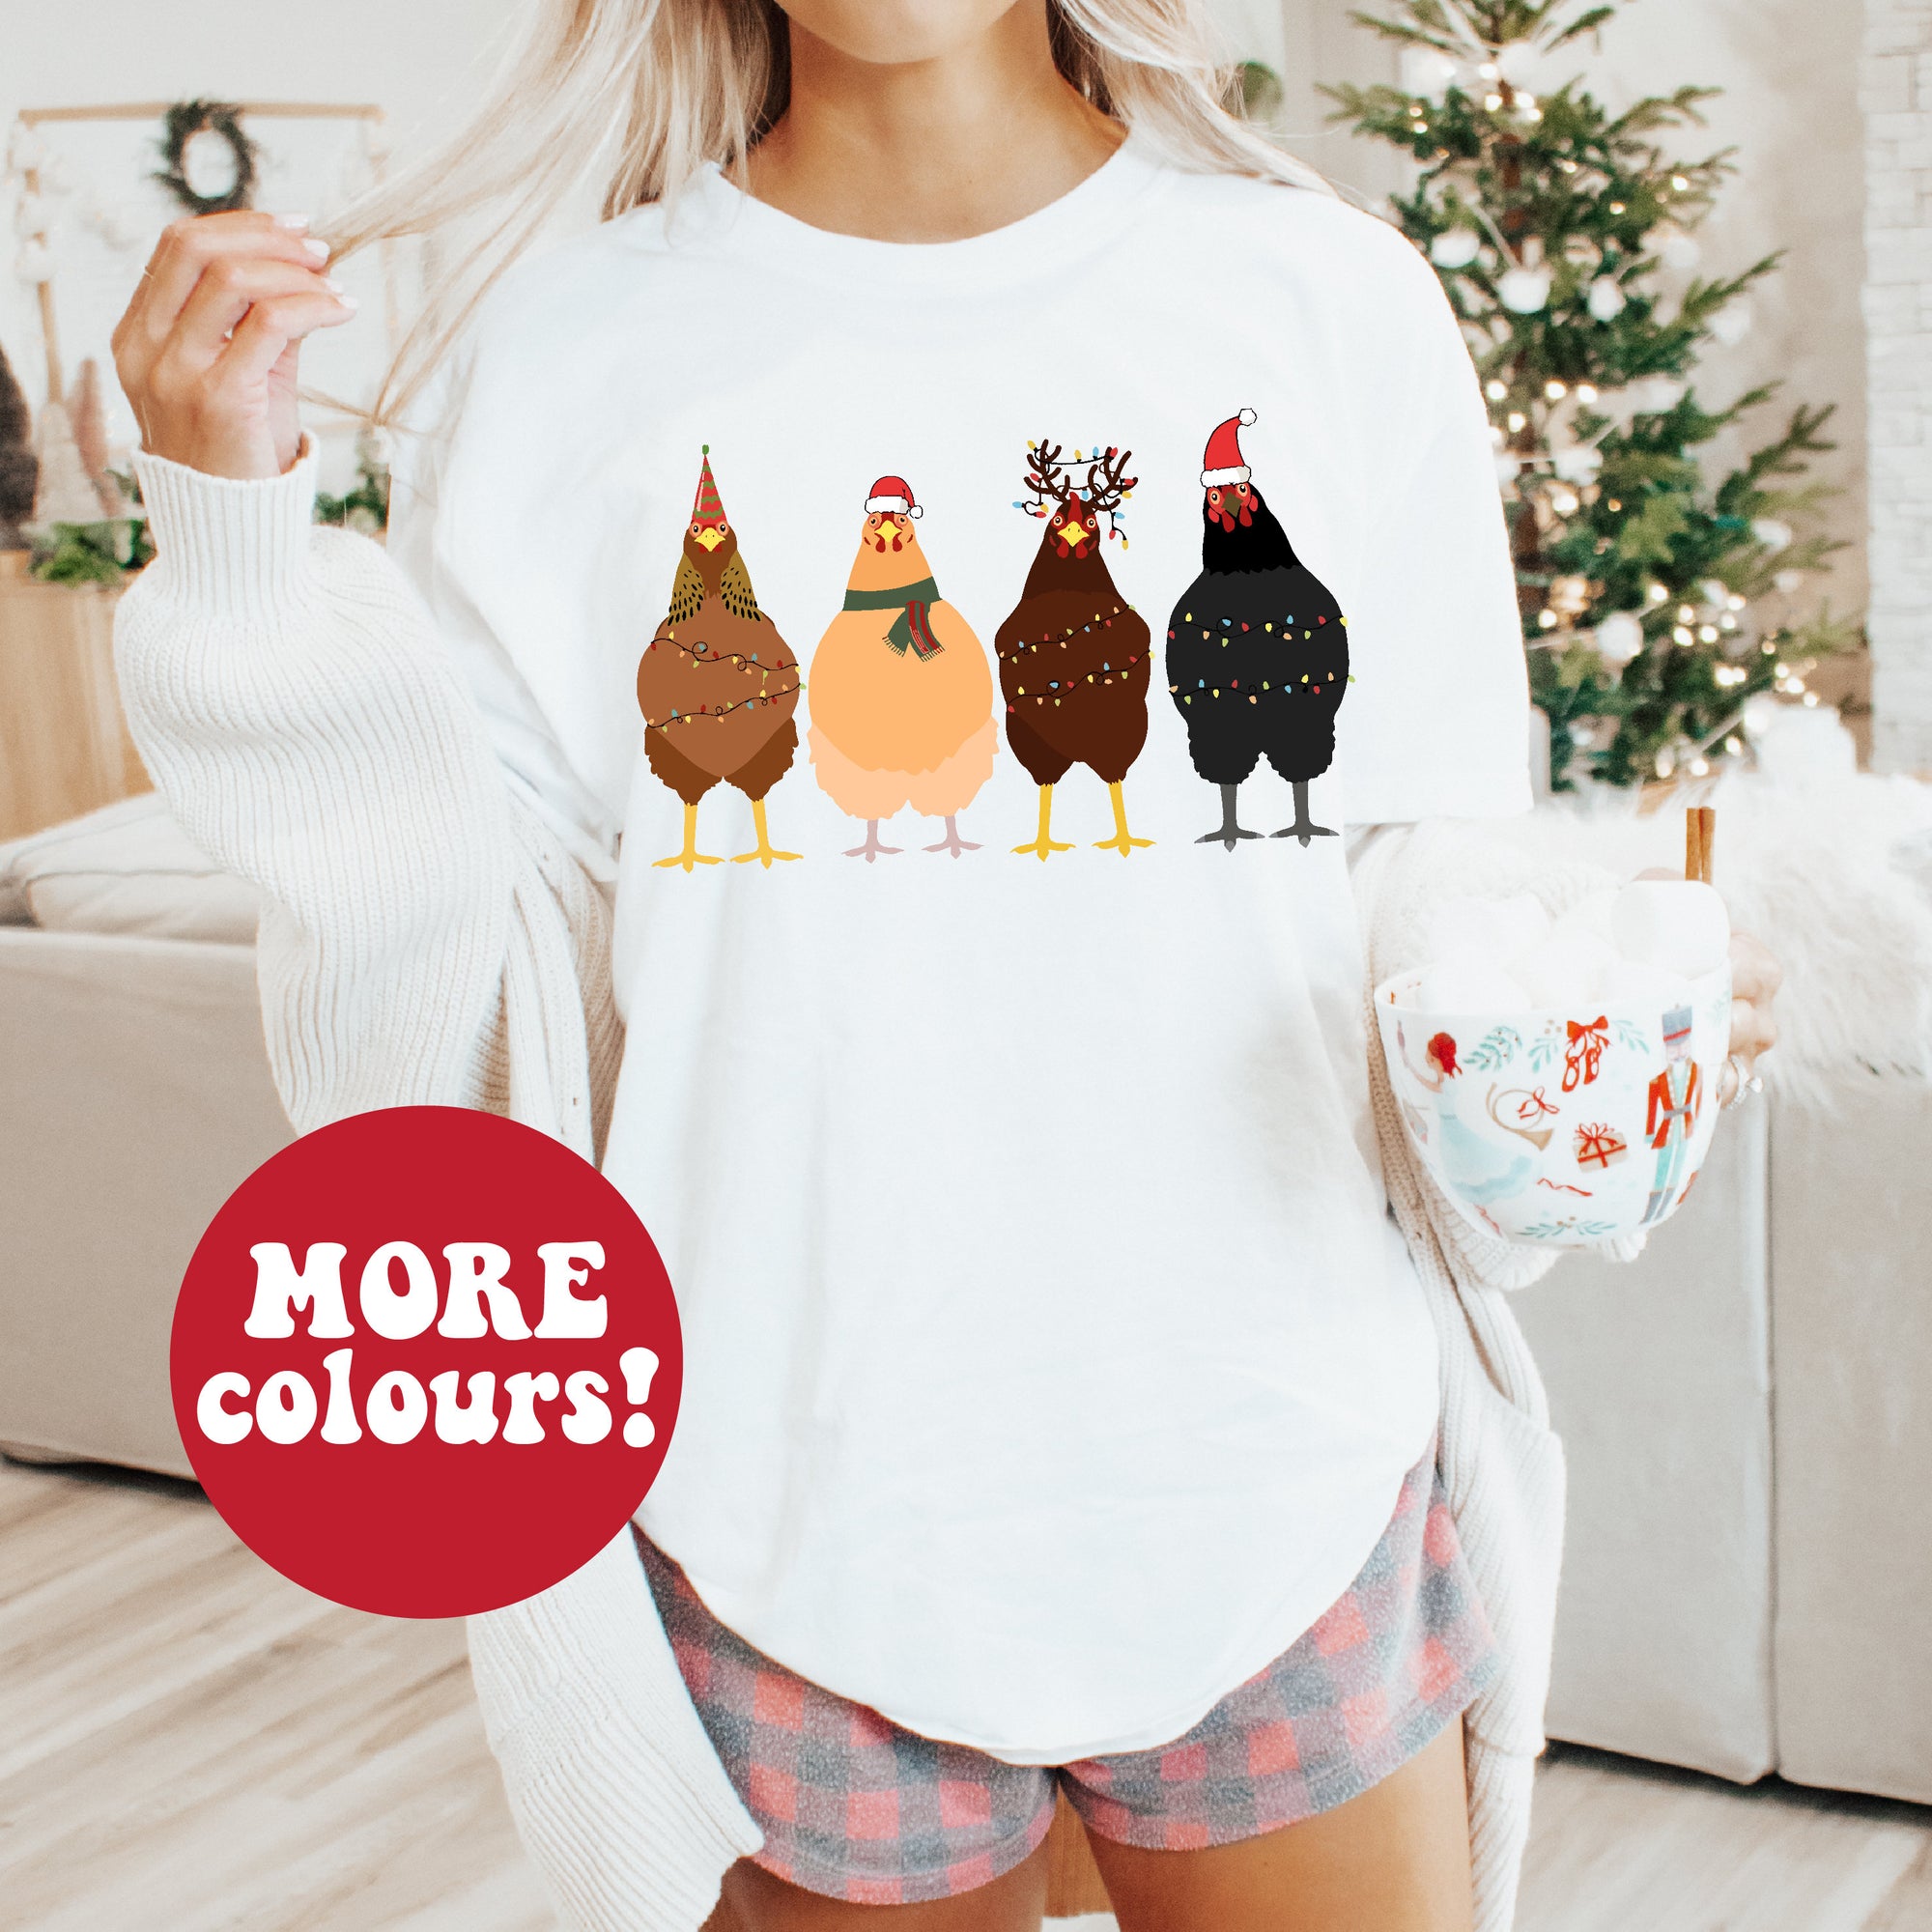 Christmas Chickens T-Shirt, Chicken T-Shirt, Christmas Chook T-Shirt, Chicken Christmas T-Shirt, Women's T-Shirt, Chicken Lovers T-Shirt